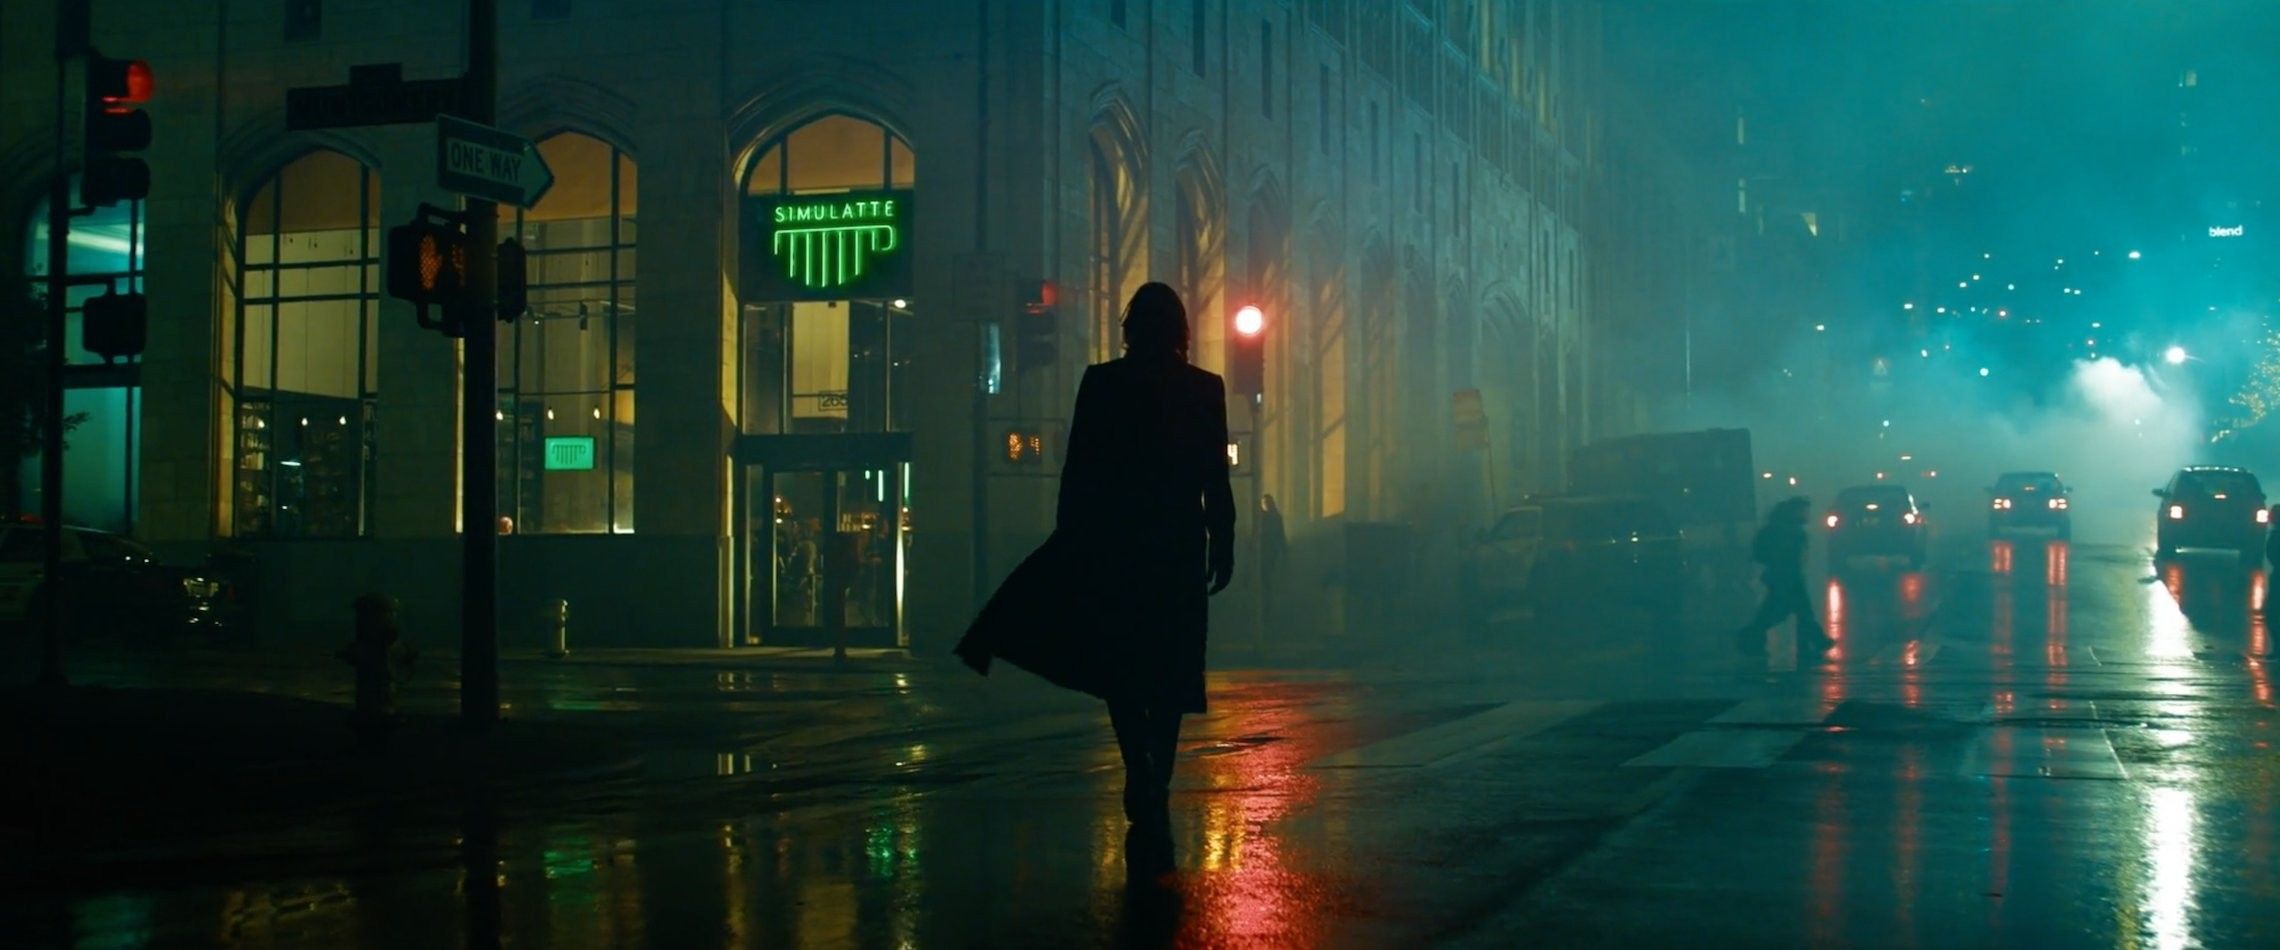 Finally, We Have New 'Matrix 4' Stills and a Teaser Trailer